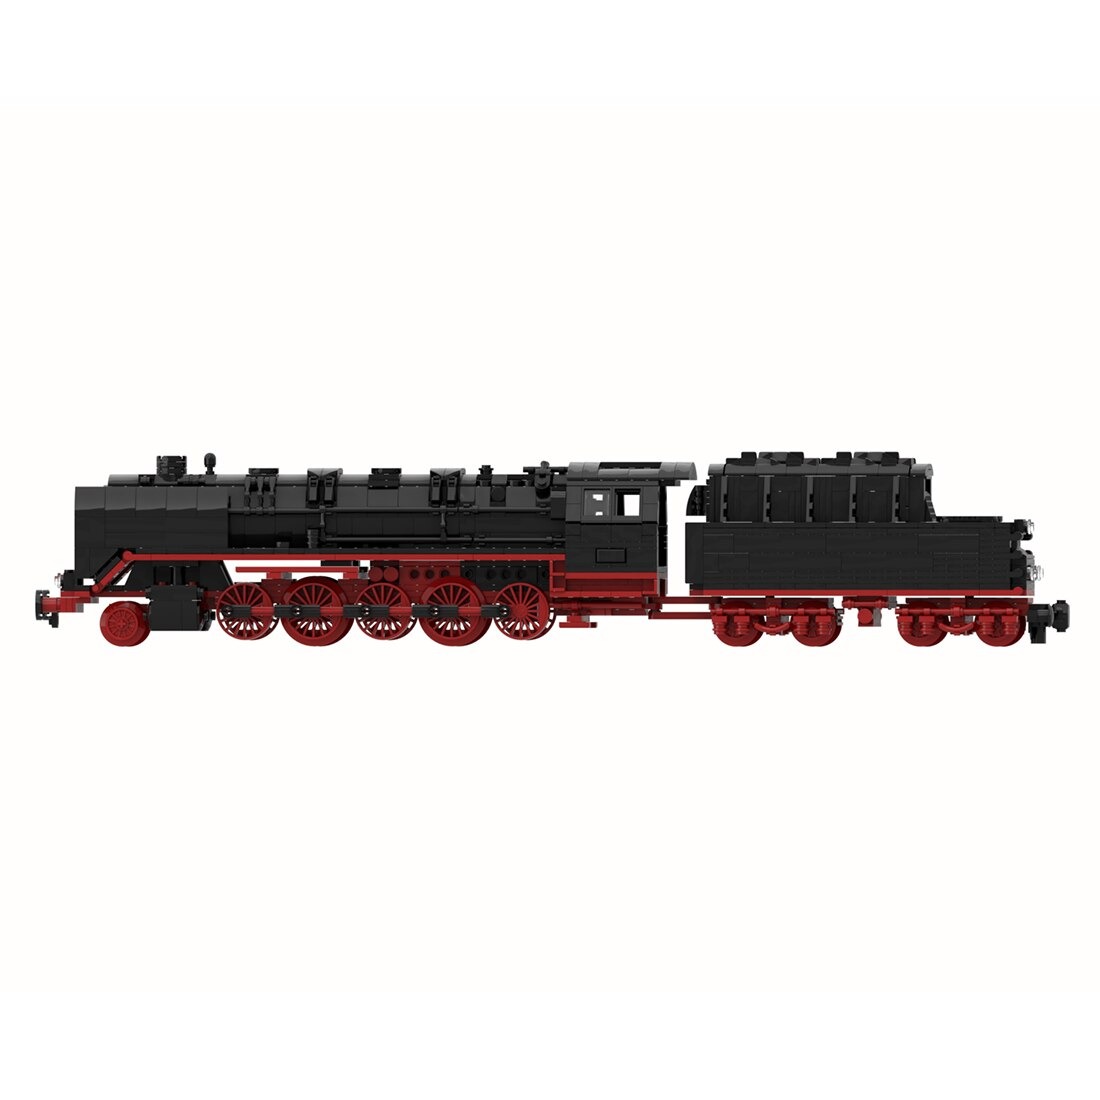 moc 129897 dr baureihe 50 steam locomoti main 5 - WANGE Block